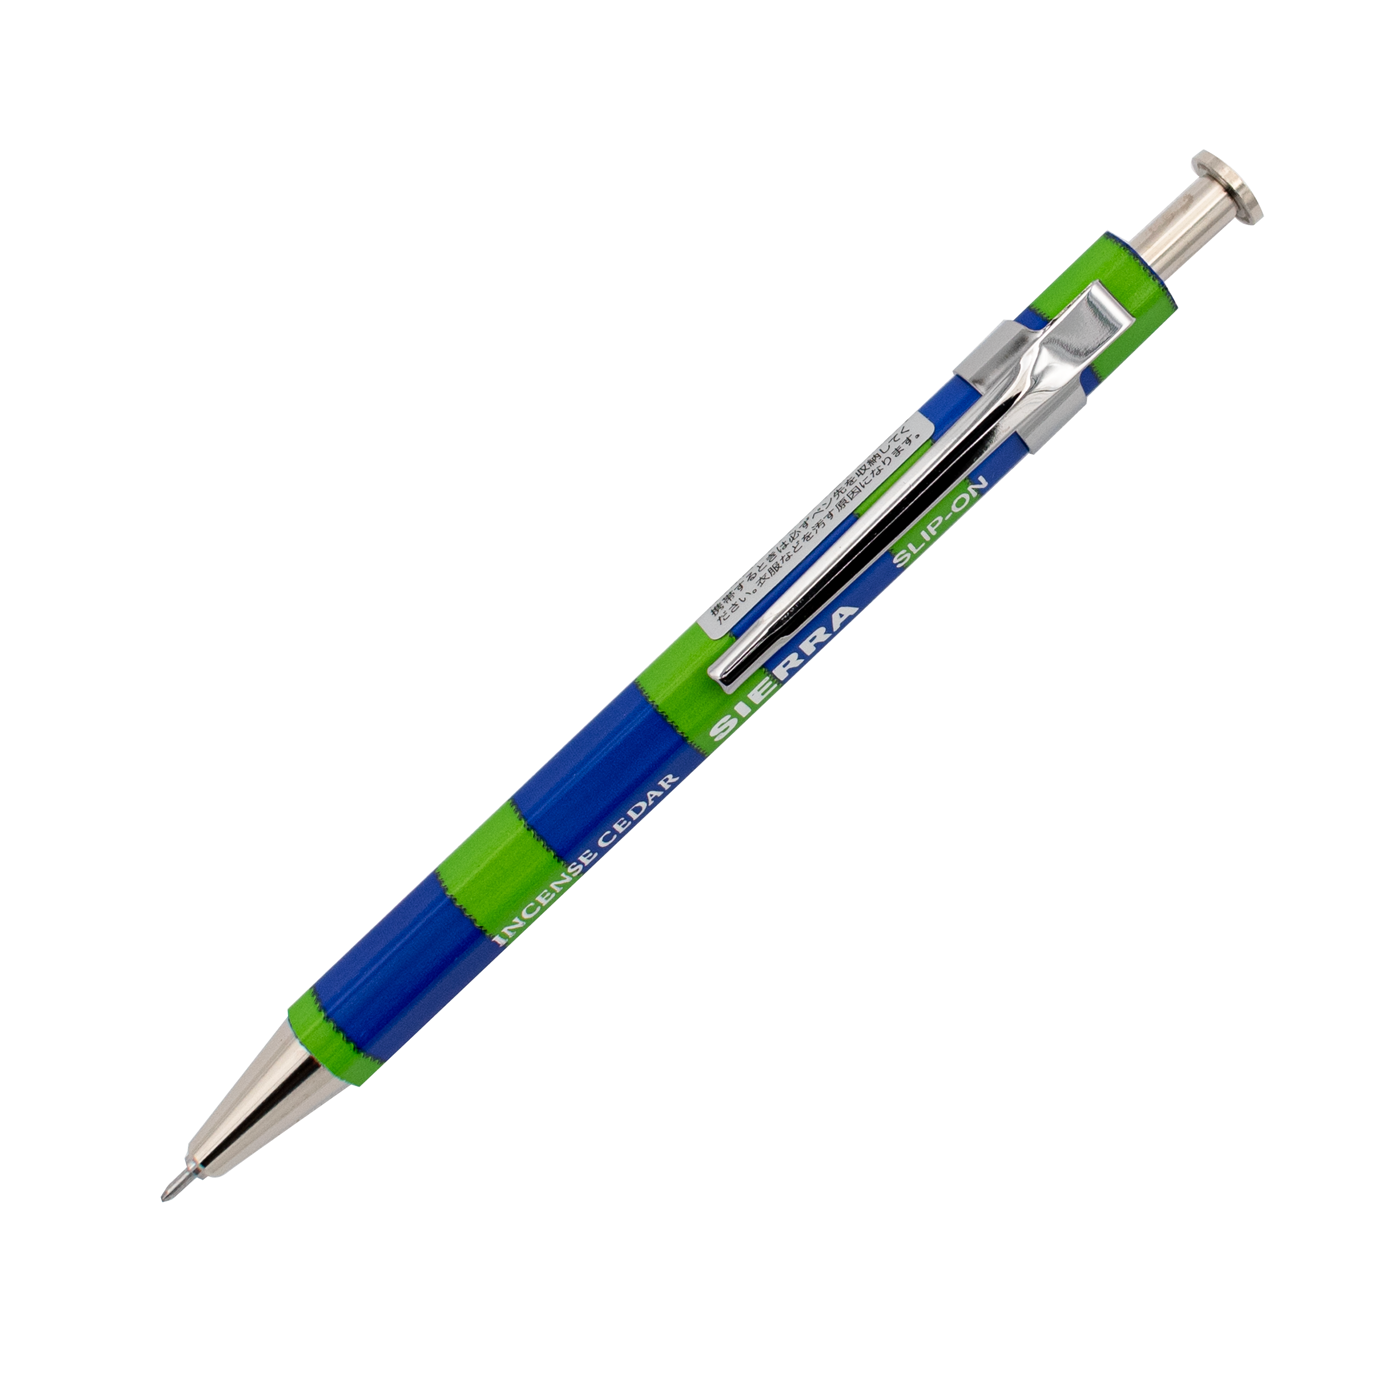 Slip-On Sierra Wooden Needle Point Pen